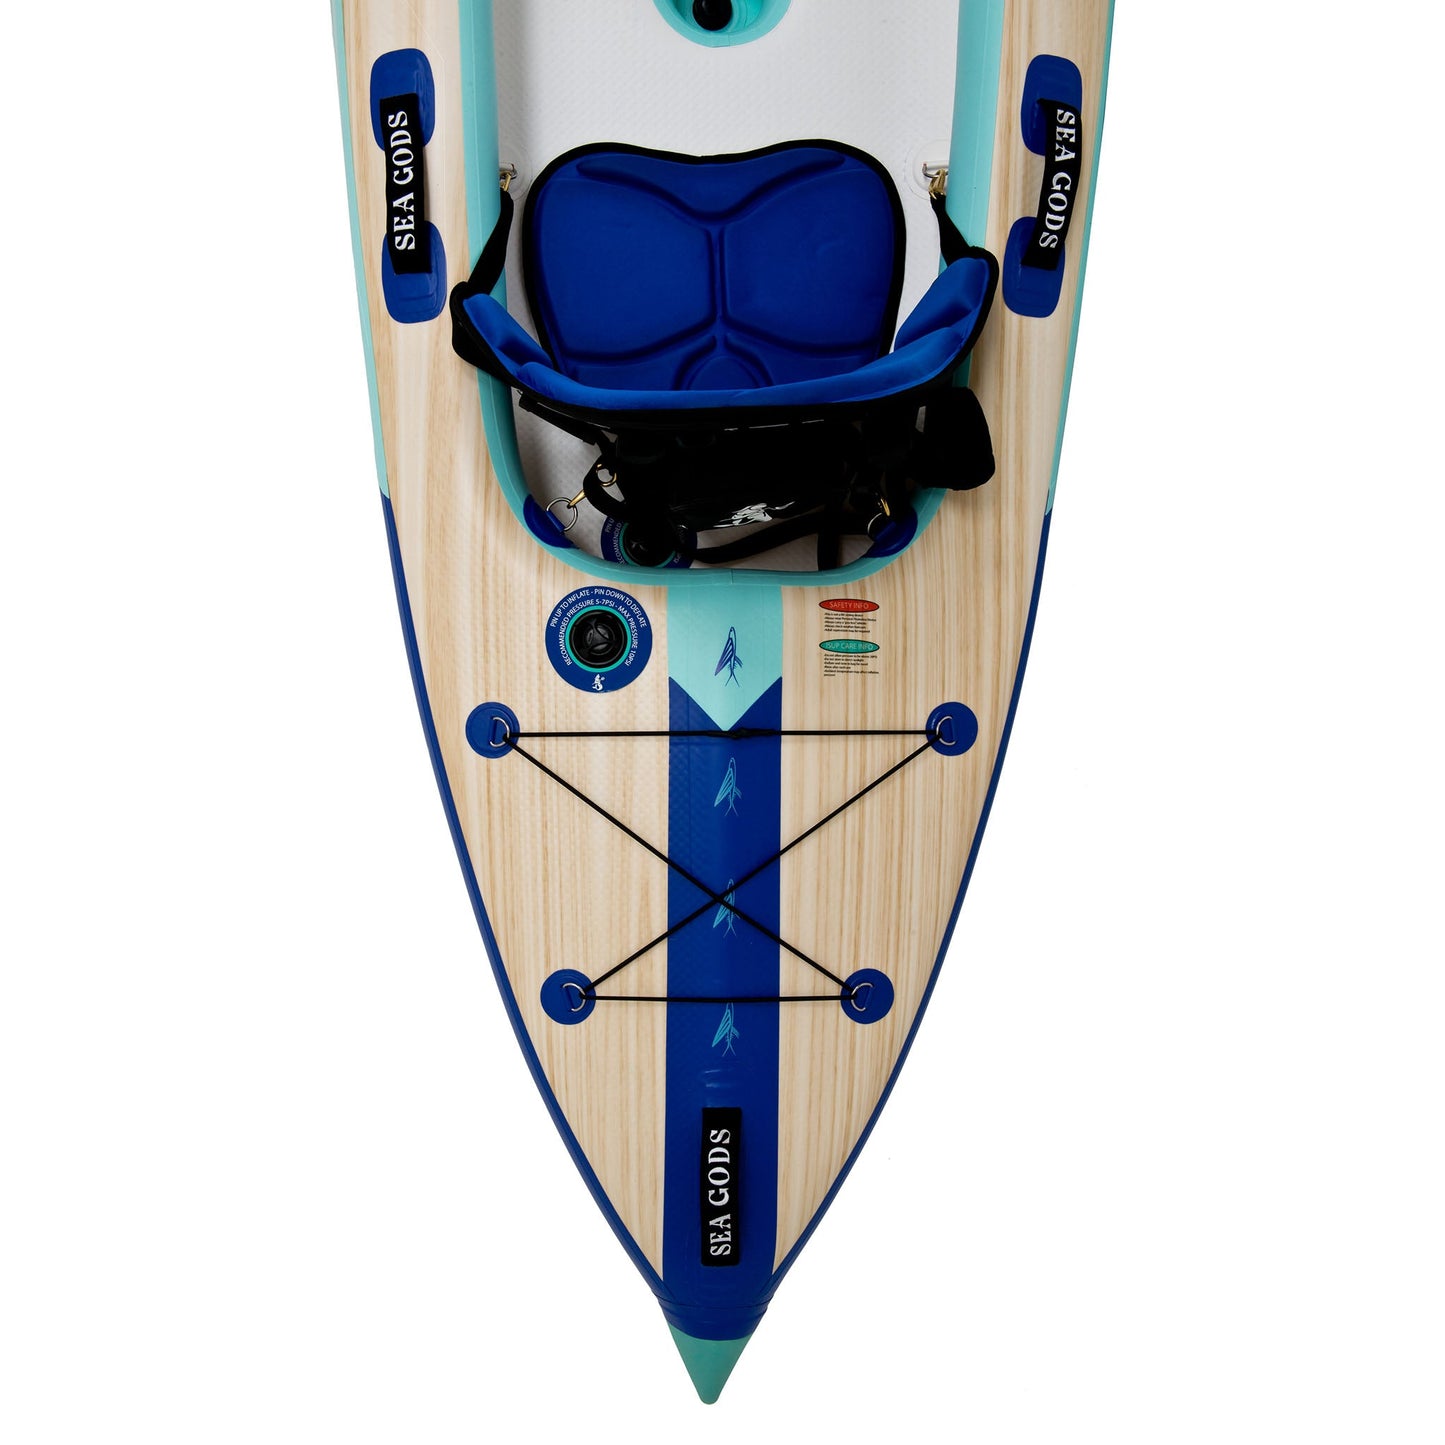 Argo Tandem Inflatable Kayak tail view | Sea Gods Australia